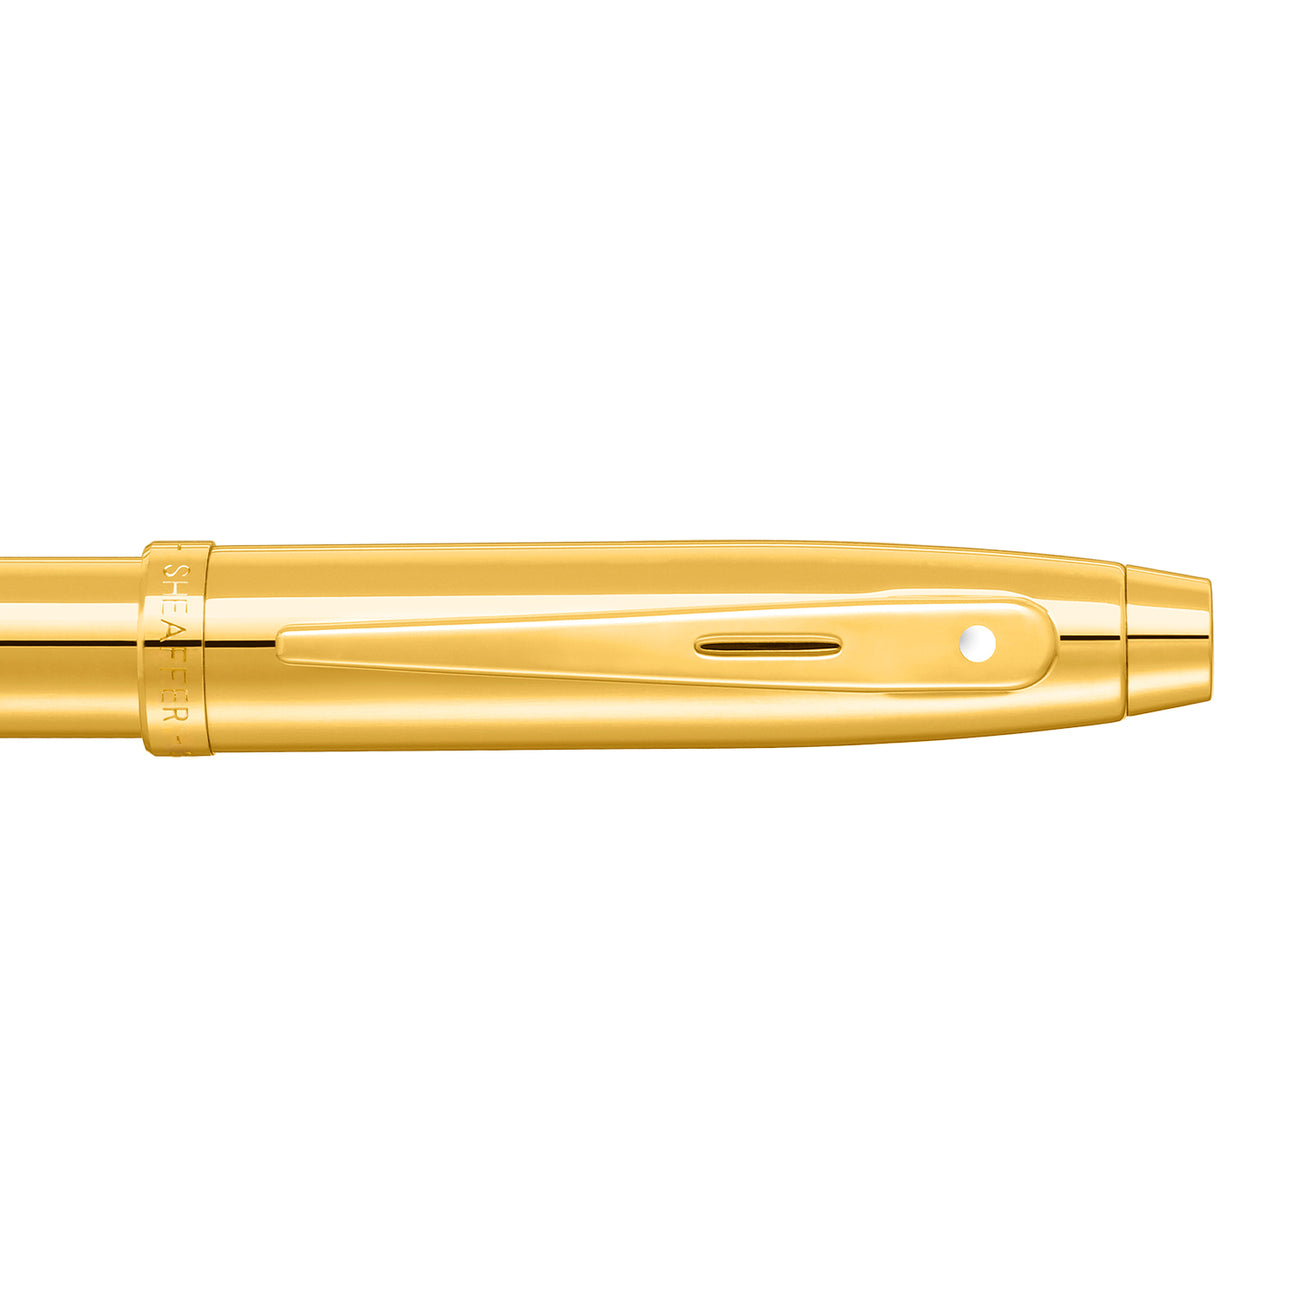 Sheaffer 100 Chrome Ballpoint Pen with Gold Tone Trim